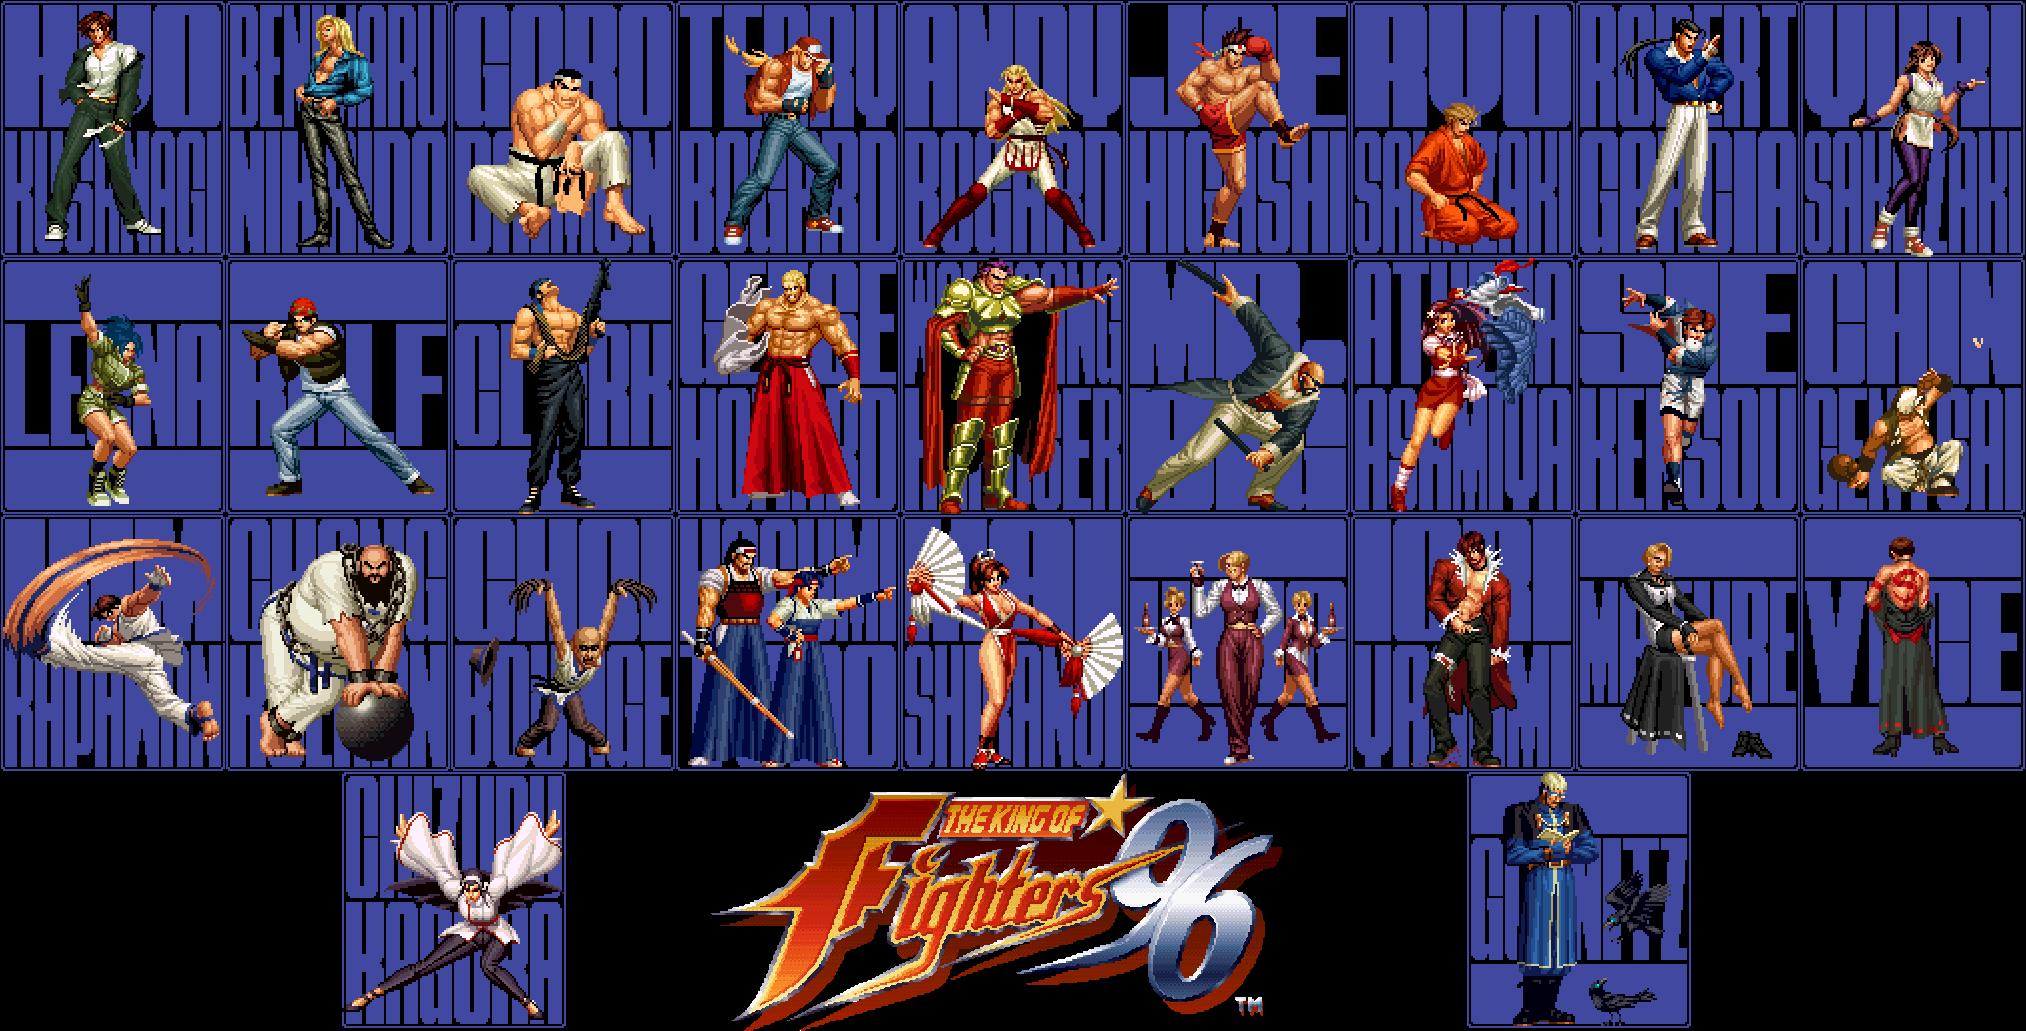 COMBO KOF 98: Seleção de Golpes The king Of Fighters' 98